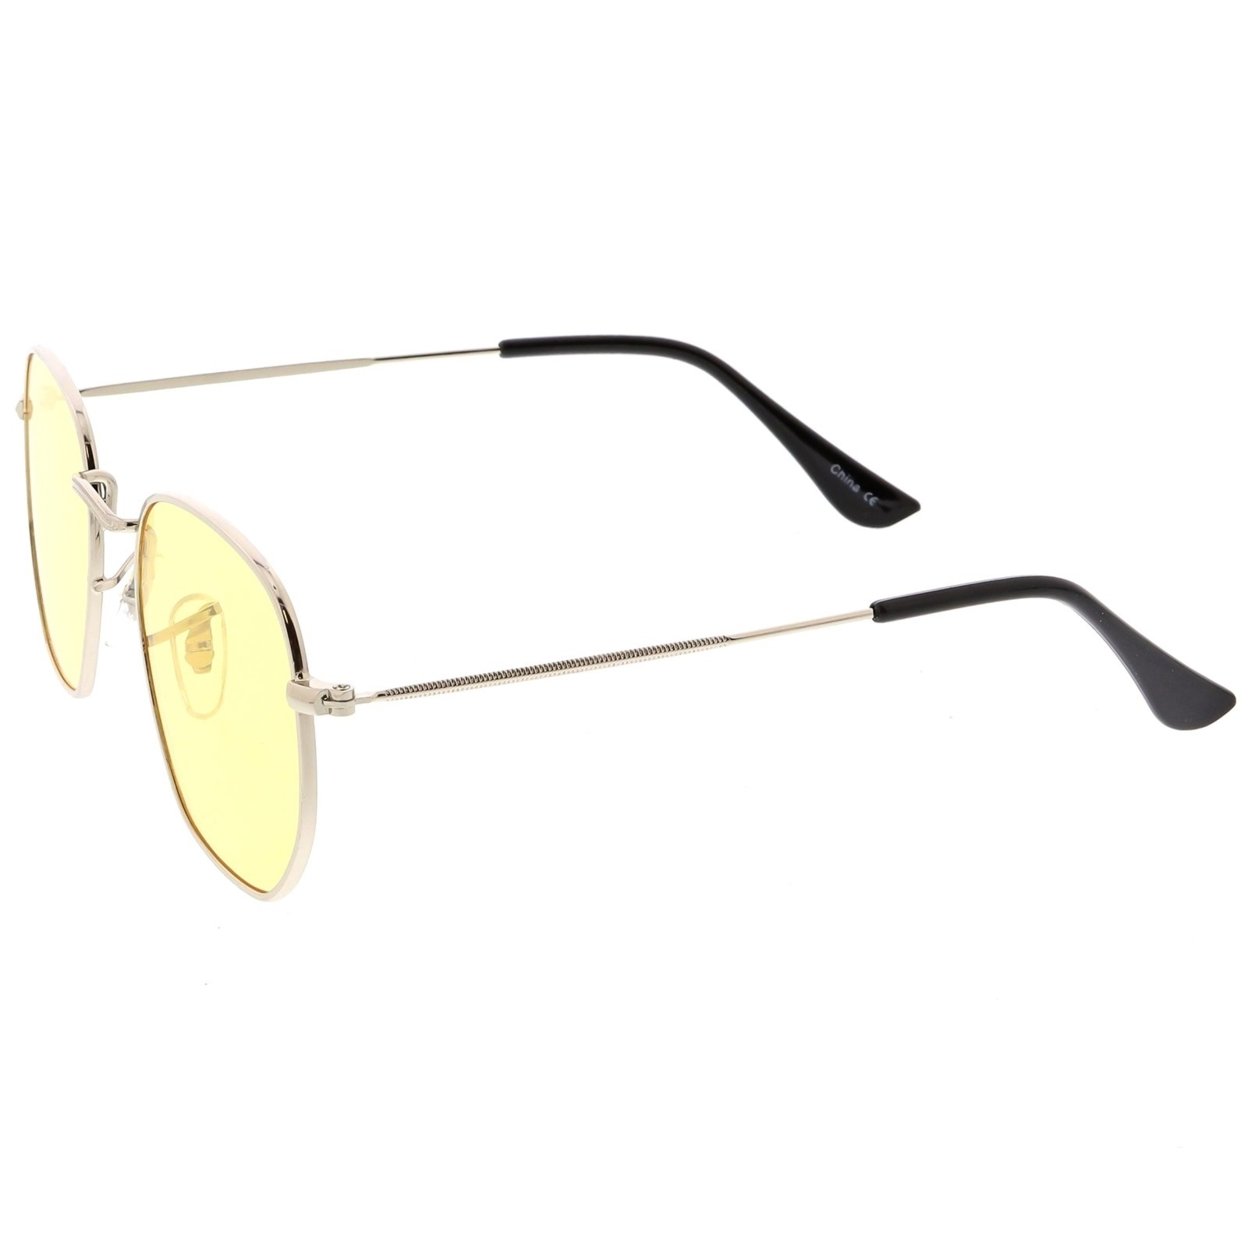 Modern Geometric Hexagonal Sunglasses Metal Slim Arms Colored Tinted Flat Lens 51mm - Silver / Clear